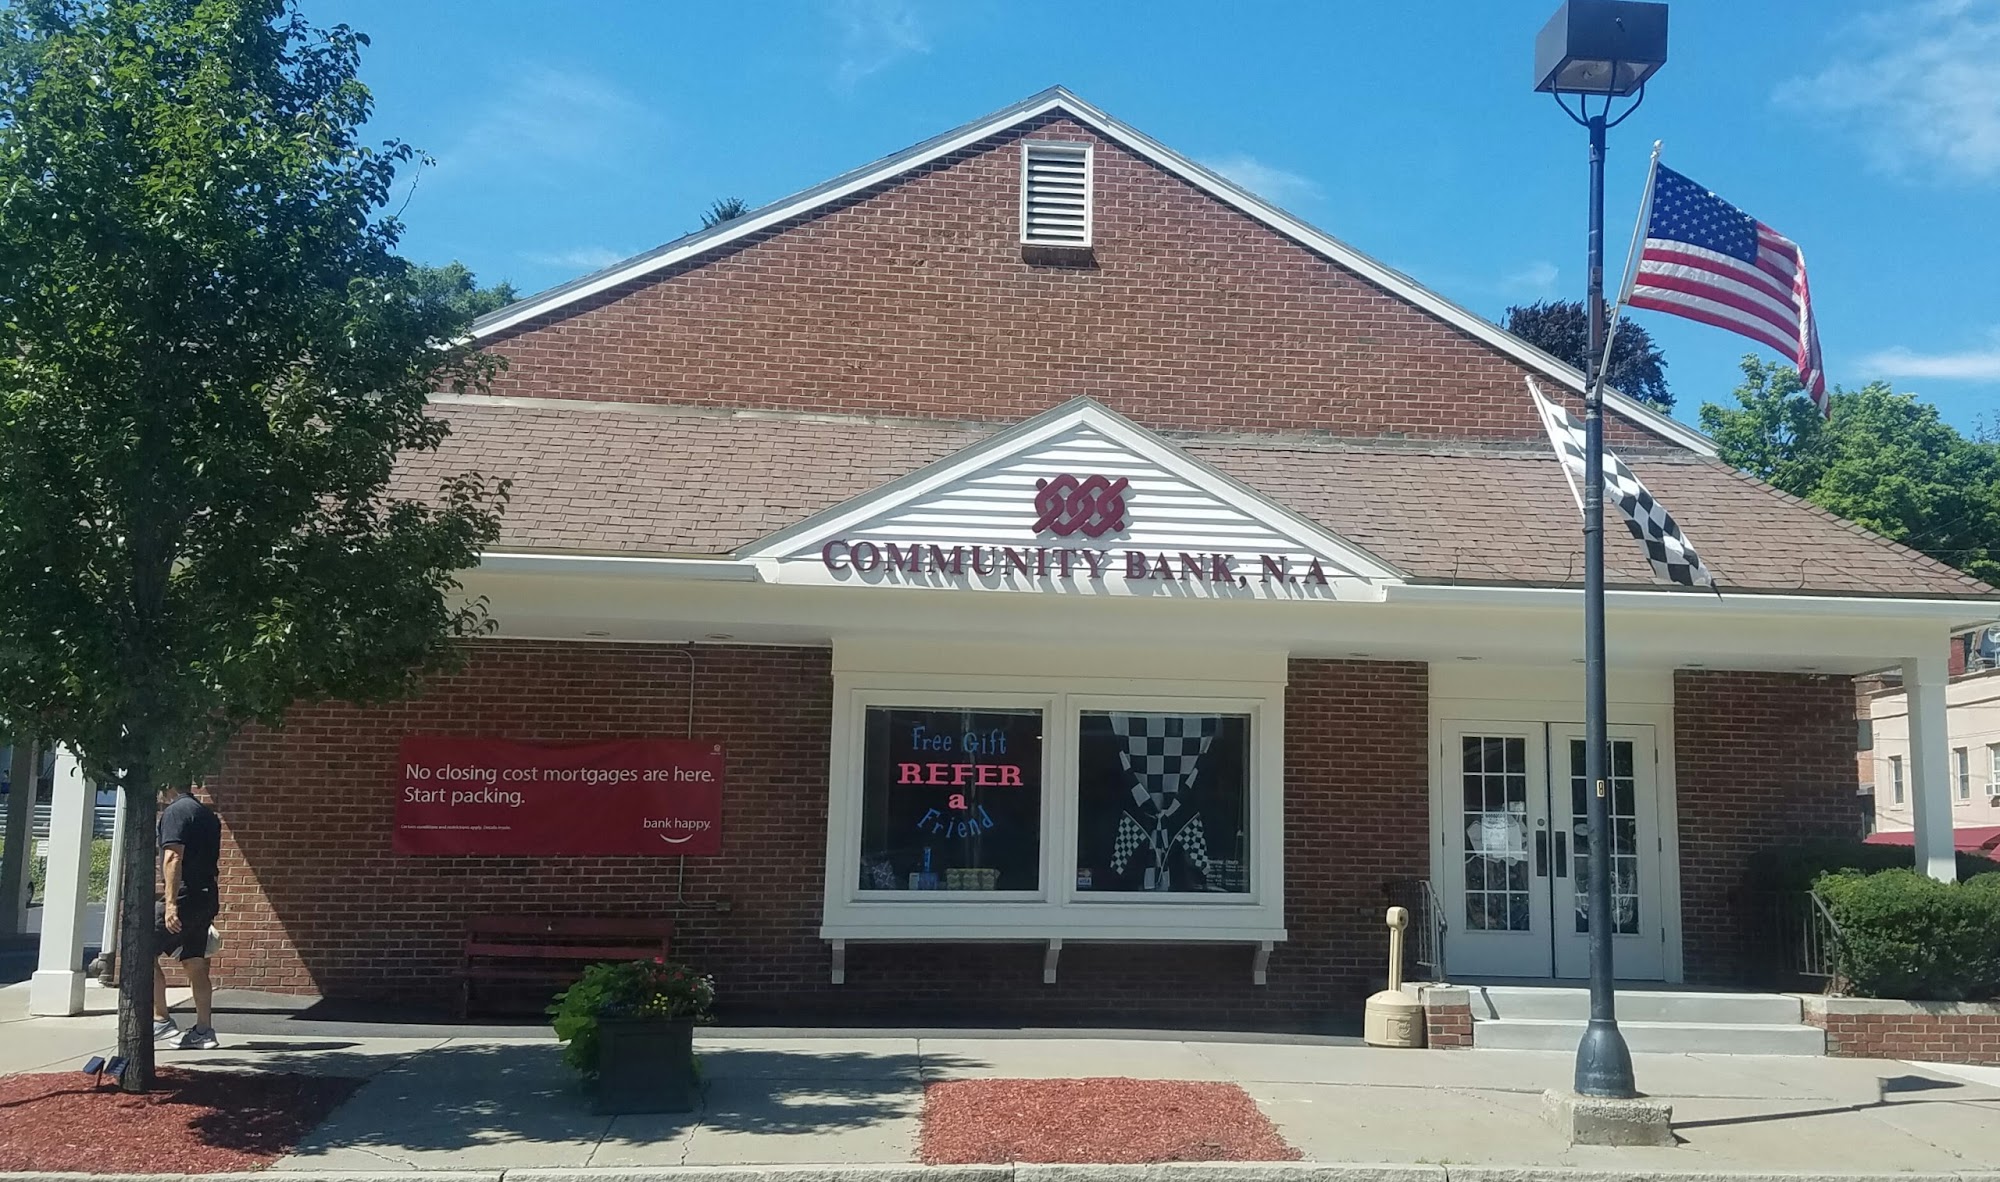 Community Bank, N.A.